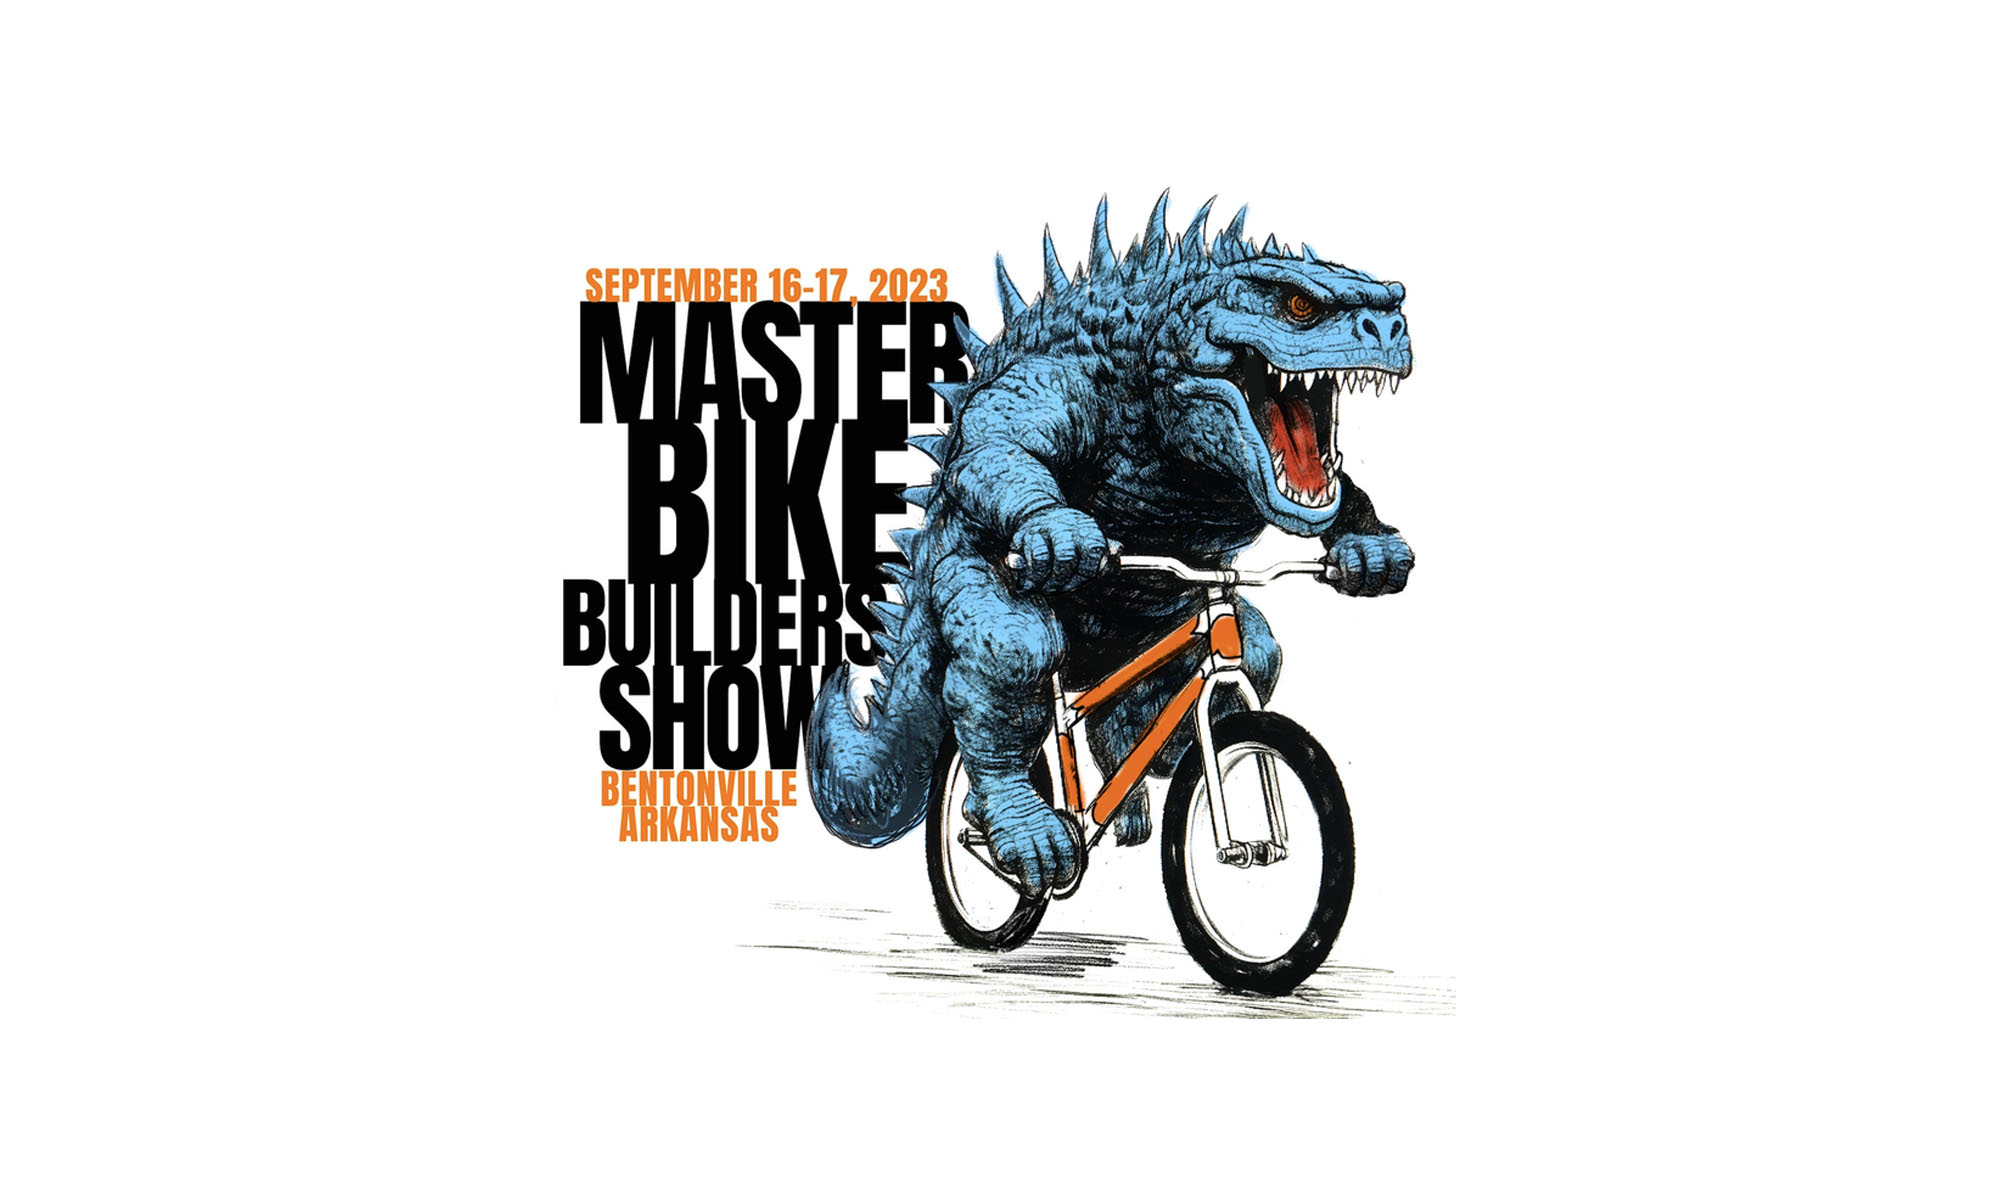 Master Bike Builders show Arkansas 2023